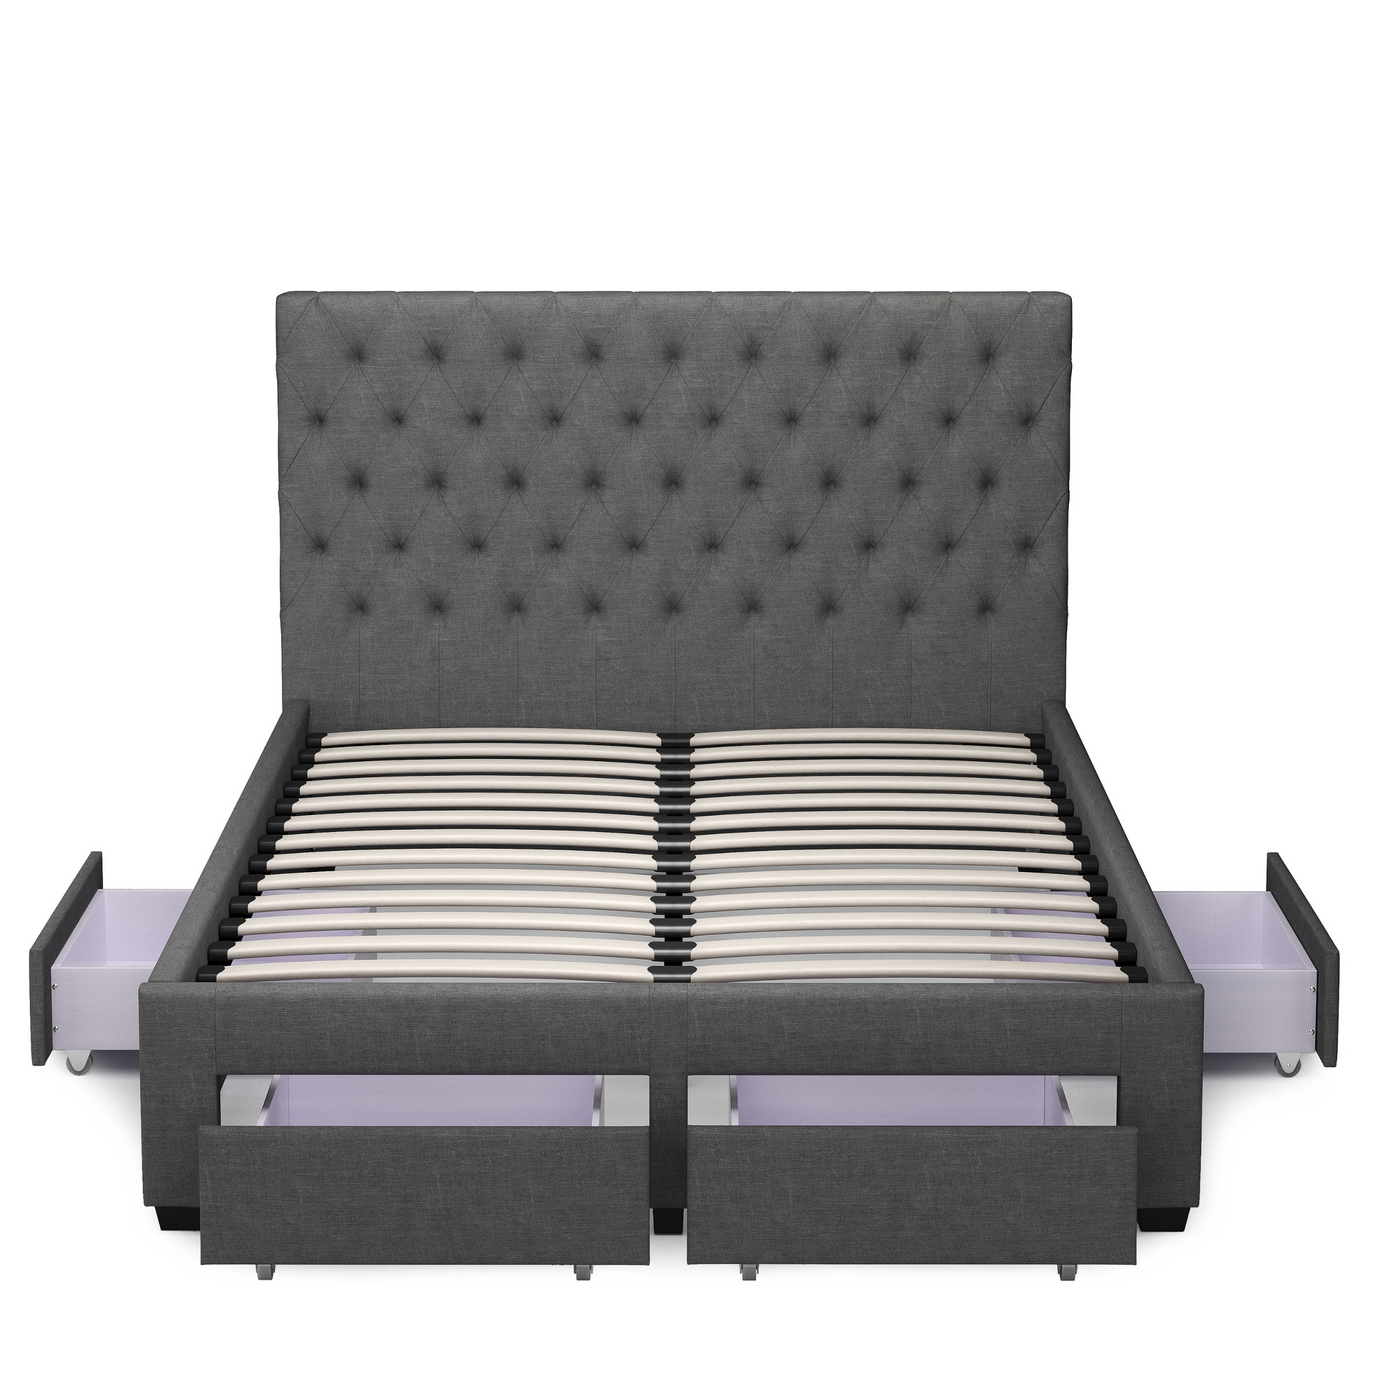 Zest 4 Drawer Storage Bed Frame (Grey Fabric) (7822957576446)